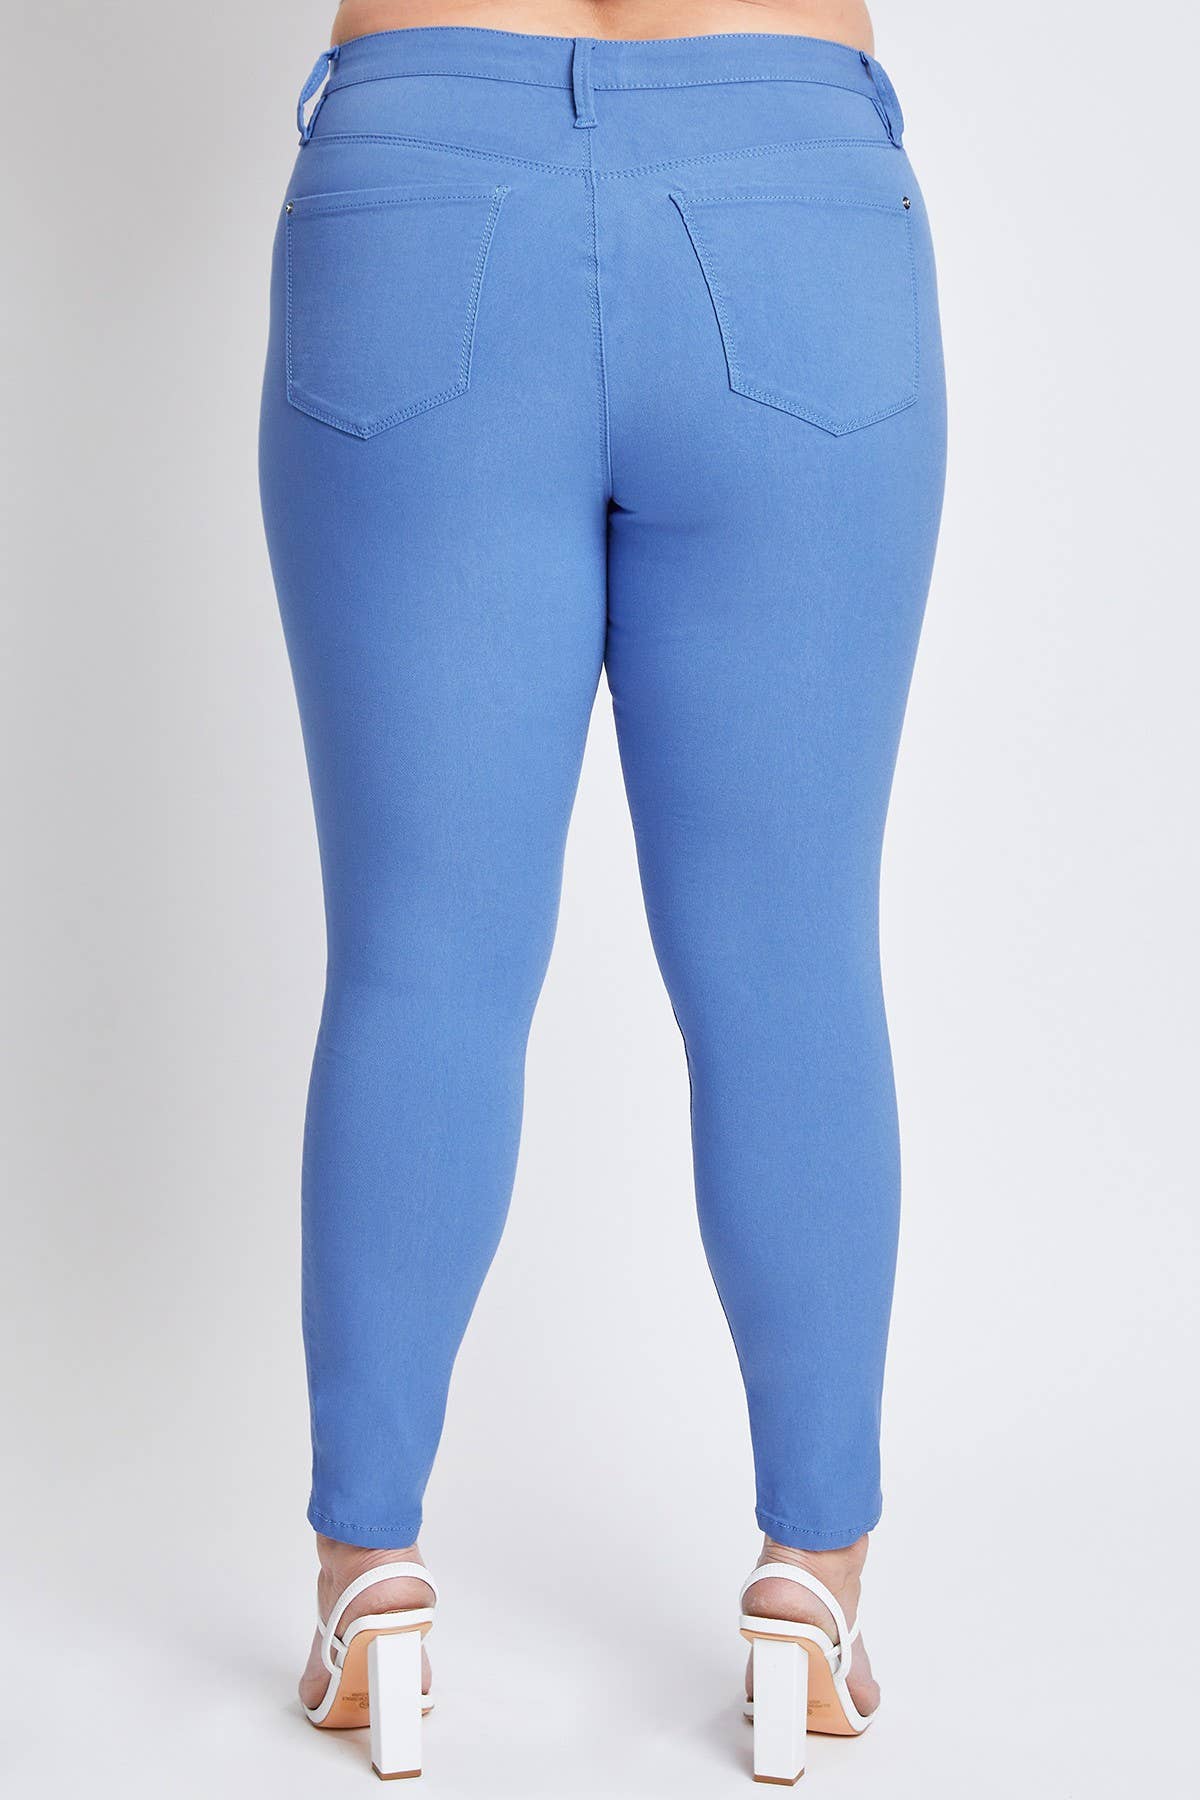 Plus Size Hyperstretch Skinny Jean: Blue Bay